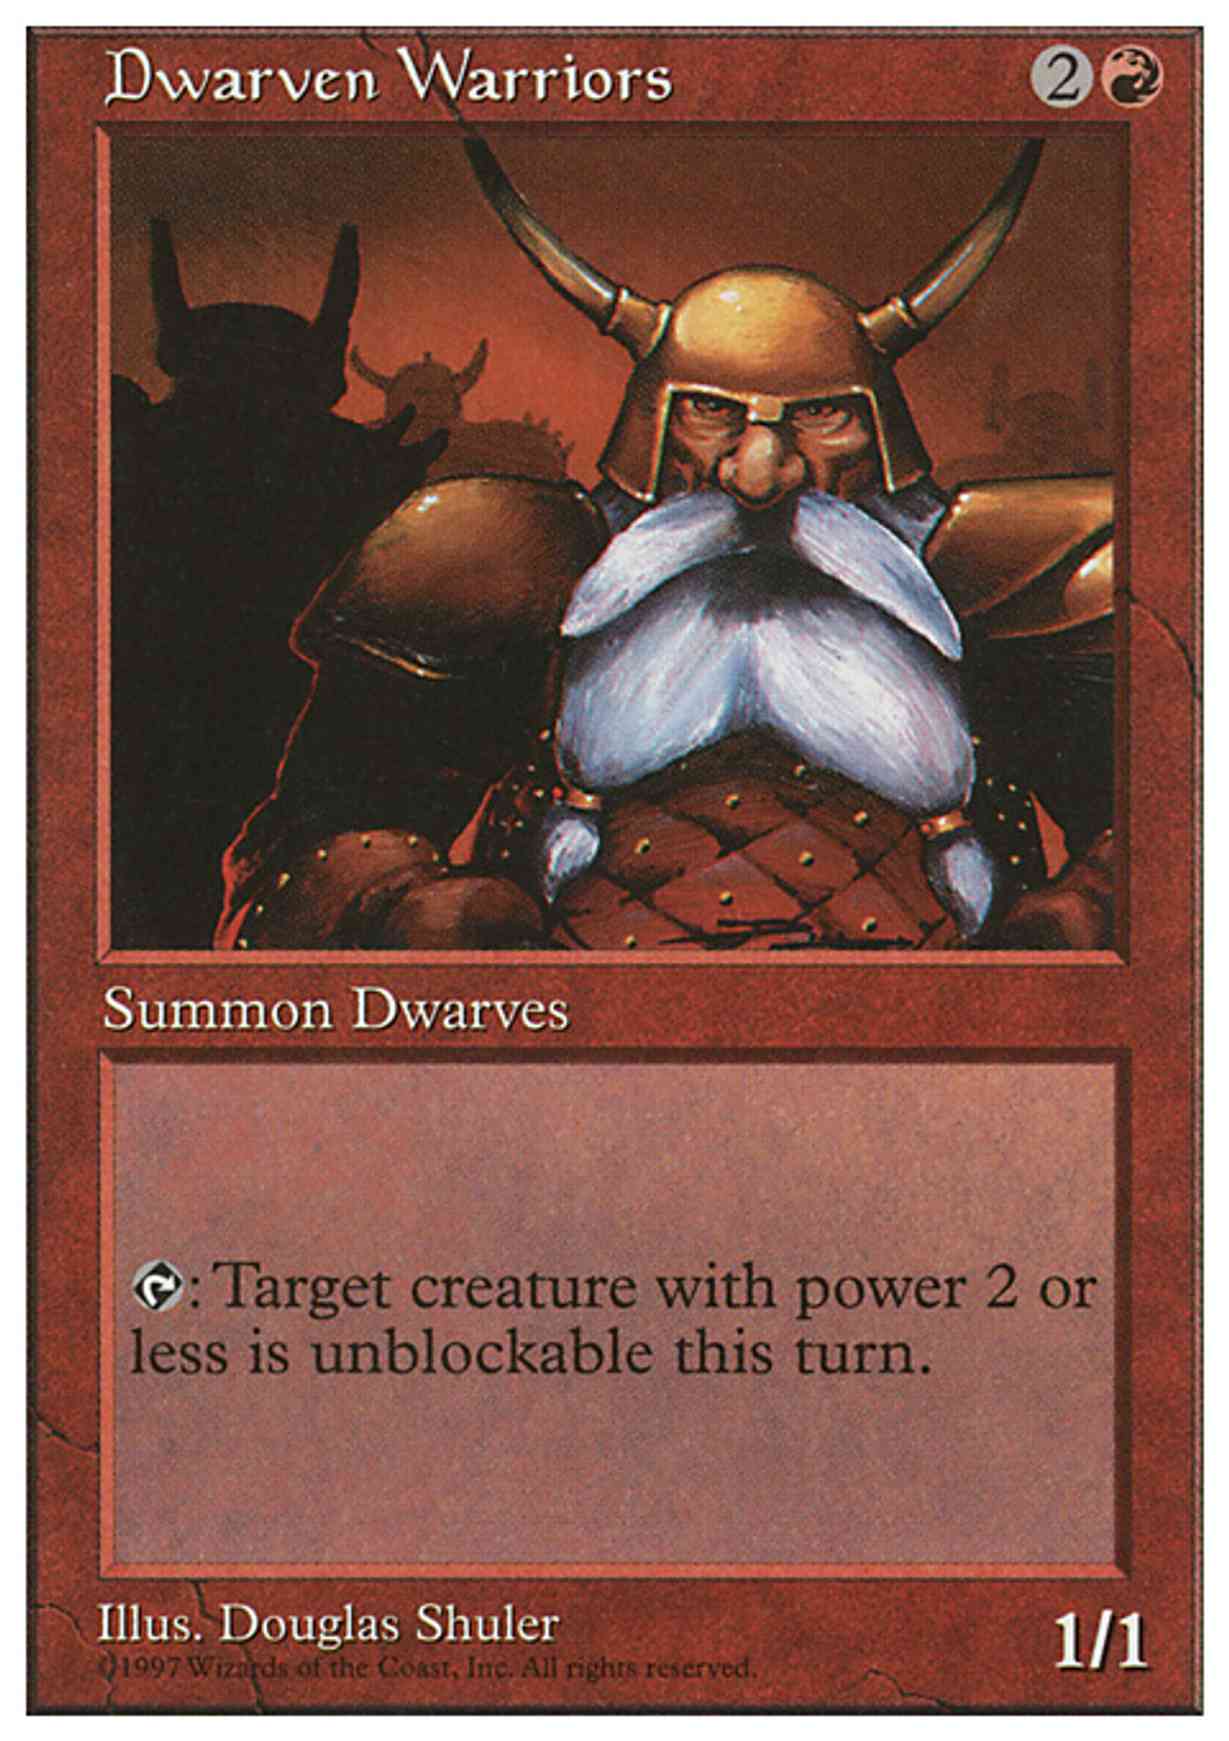 Dwarven Warriors magic card front